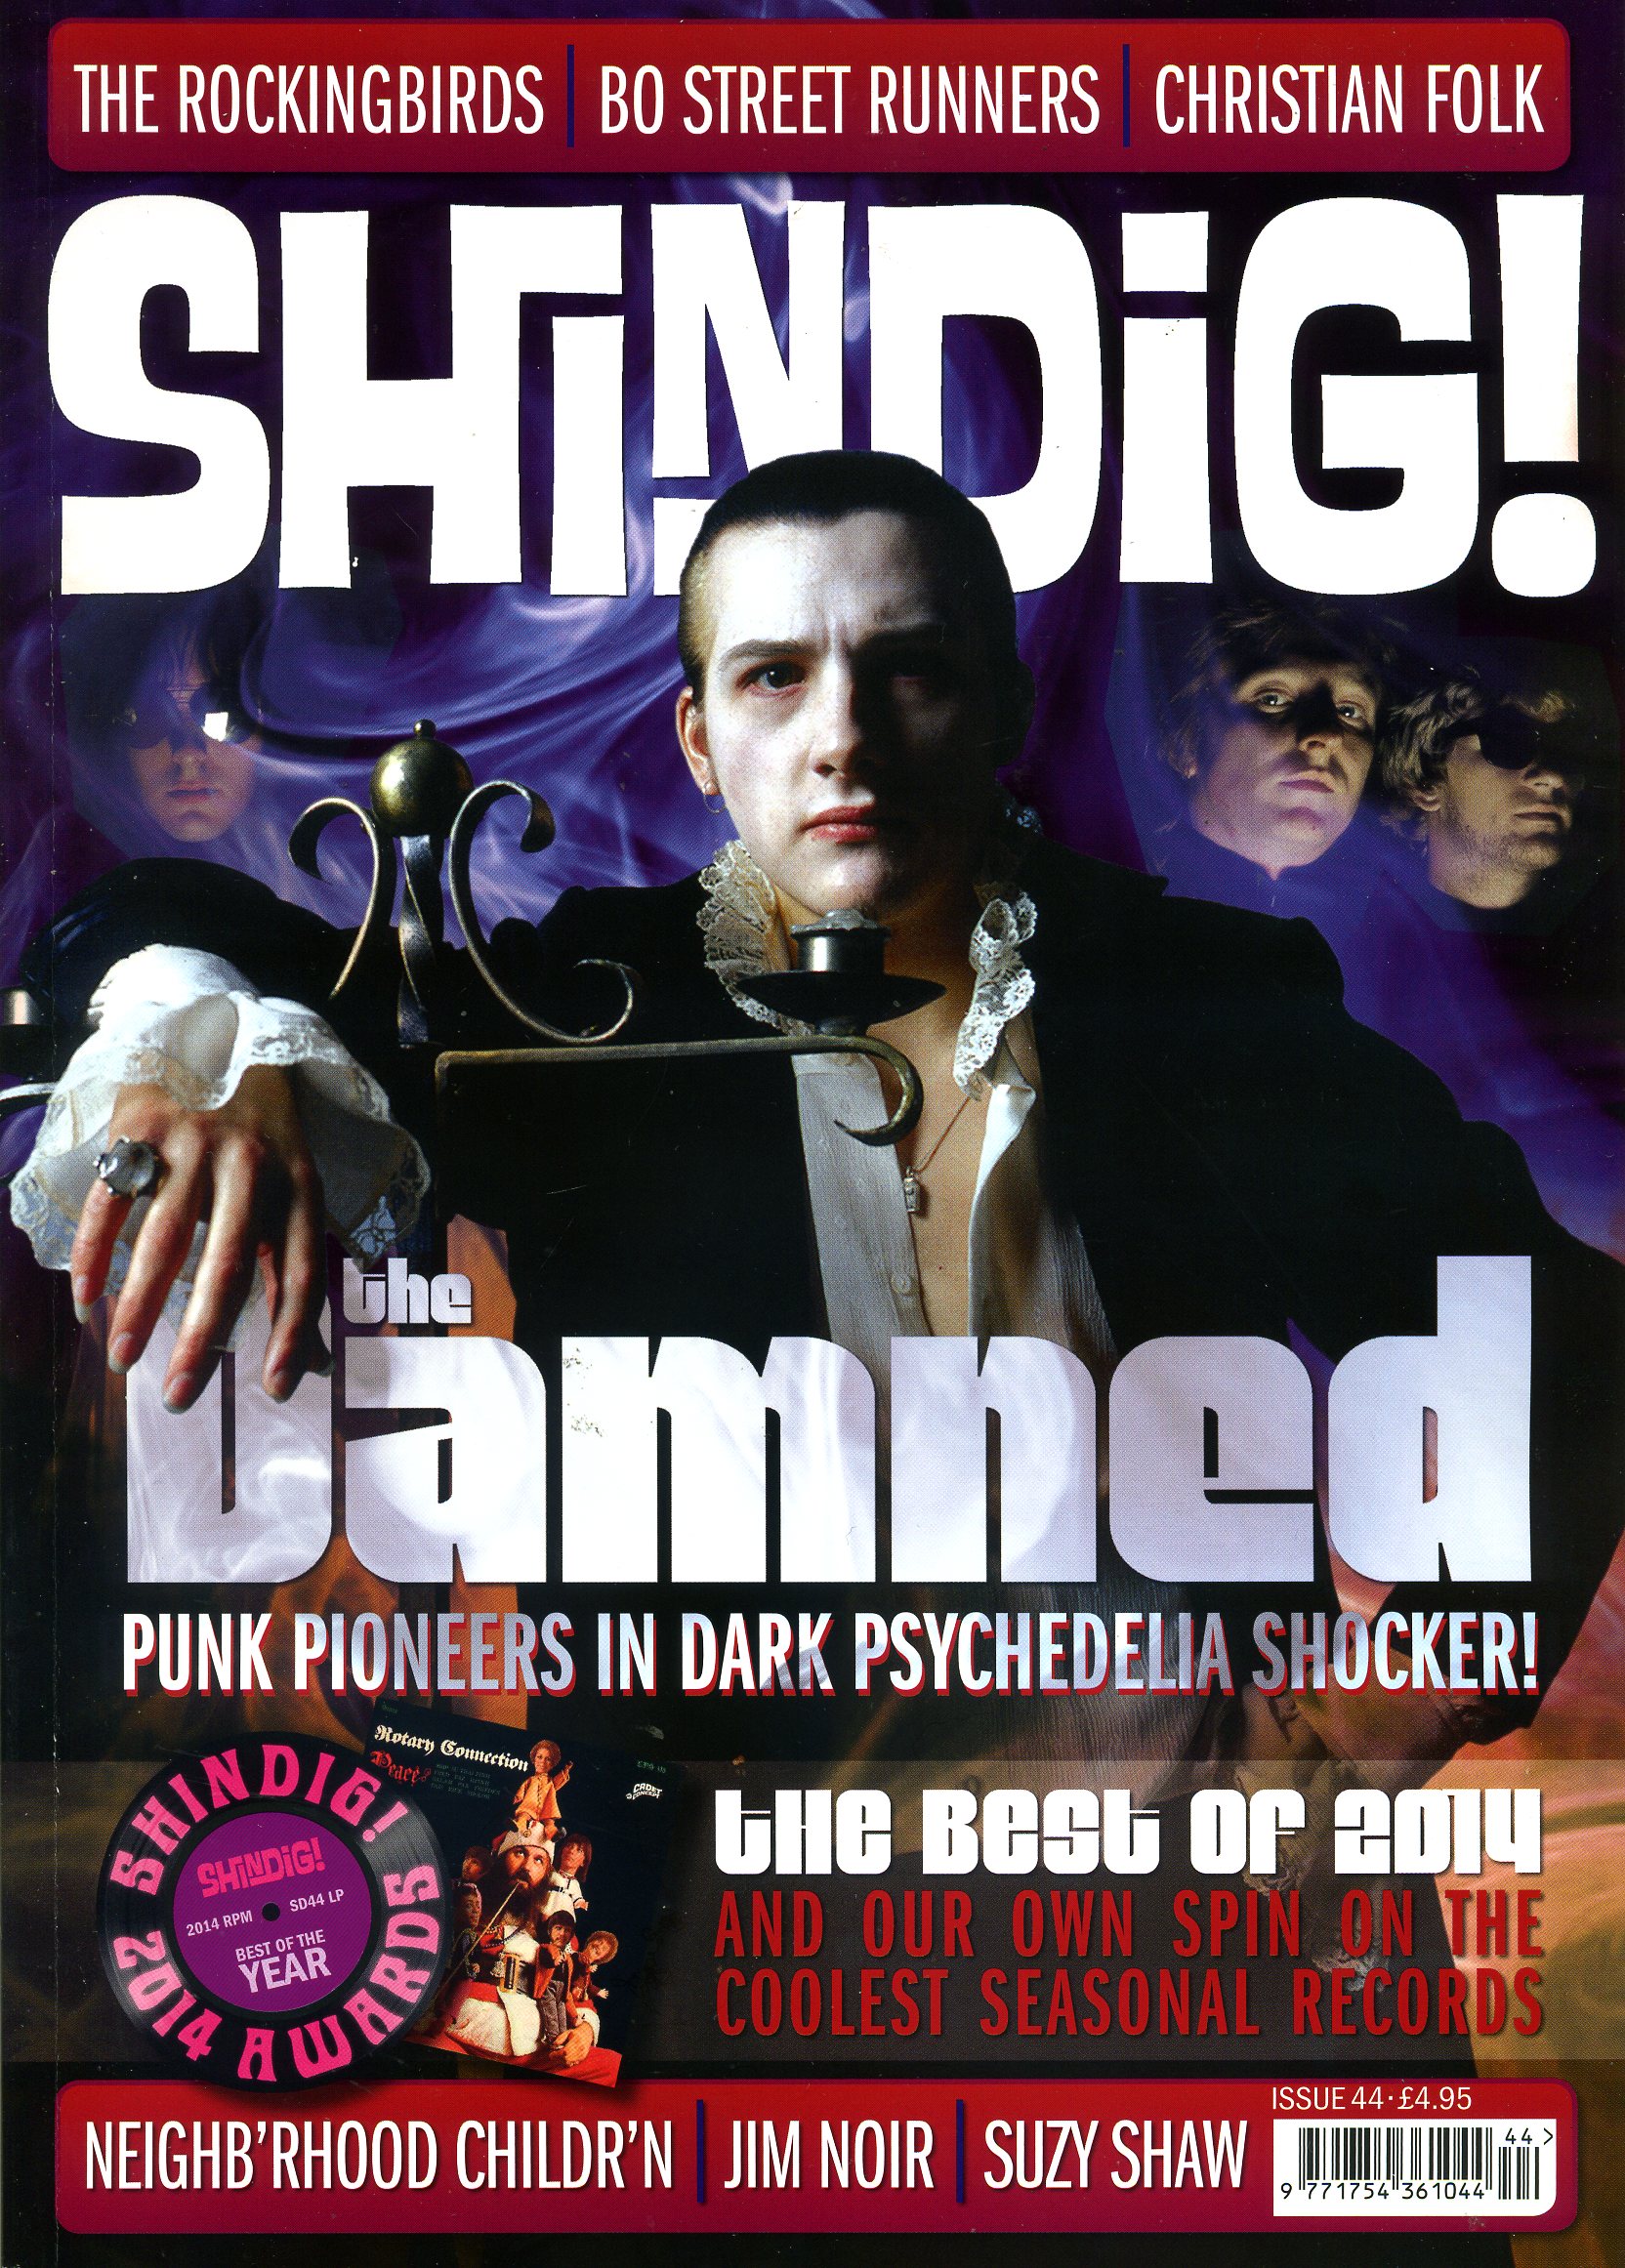 SHINDIG! Issue 44